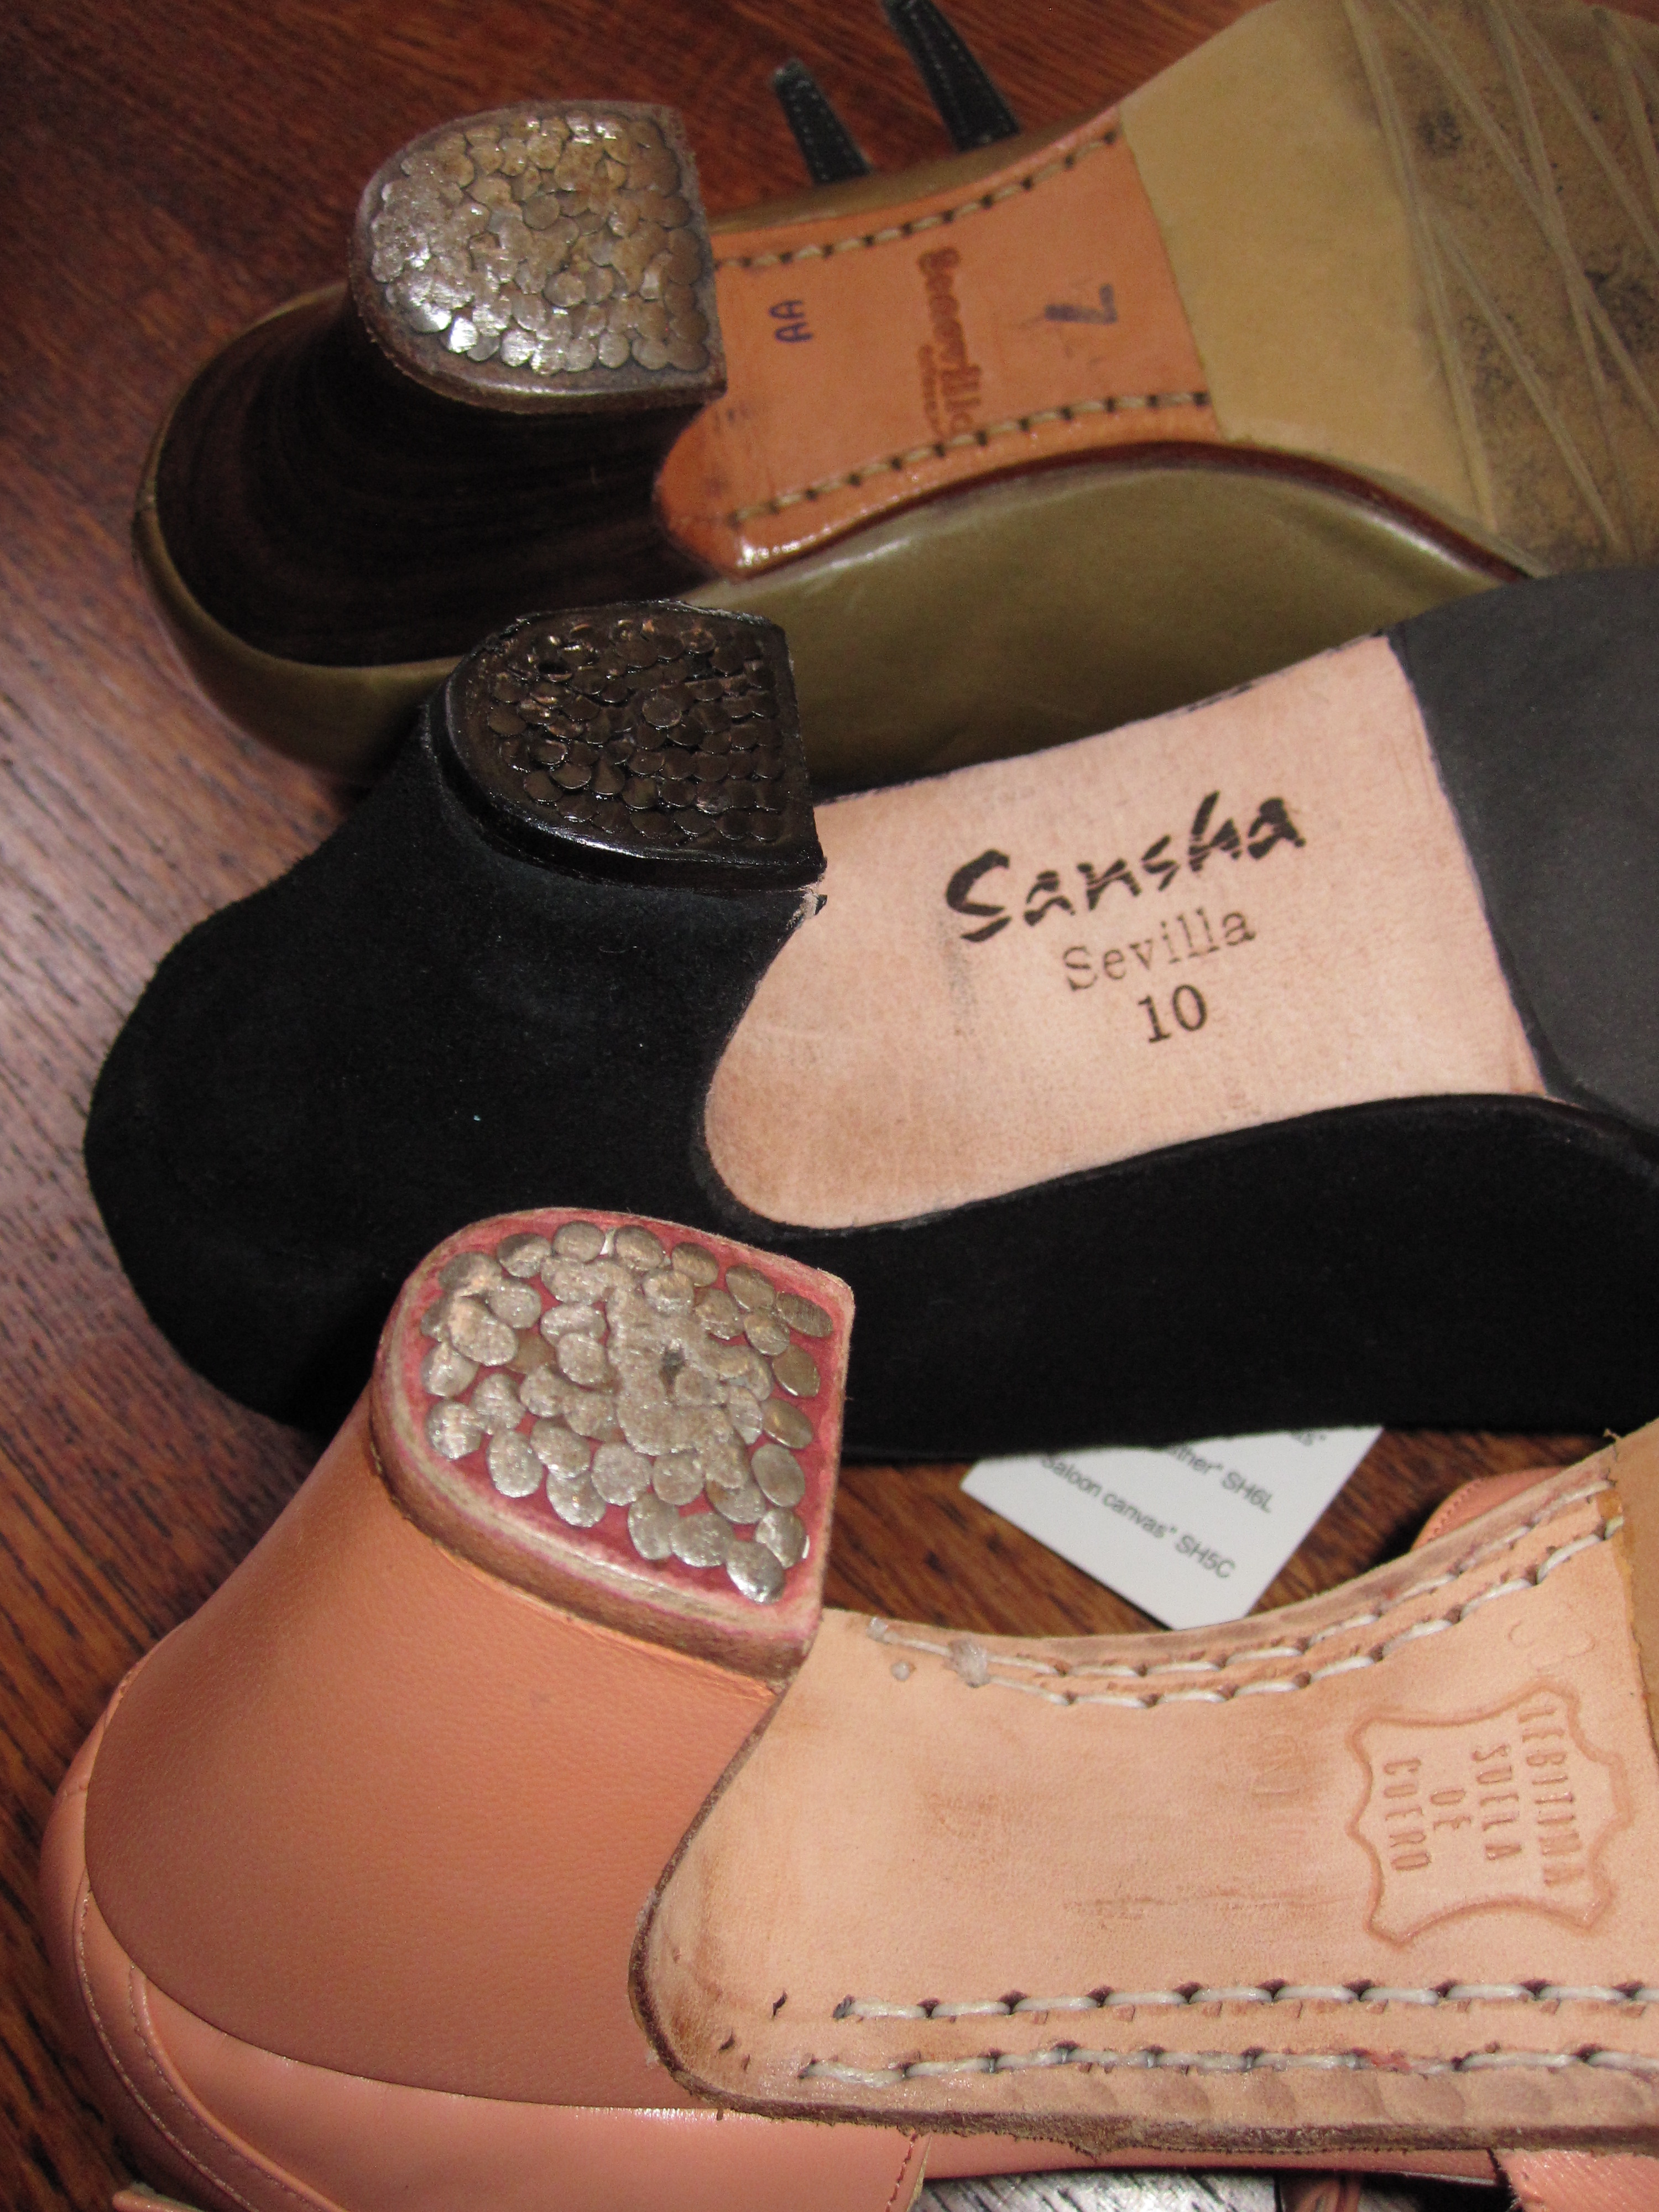 flamenco shoes for sale